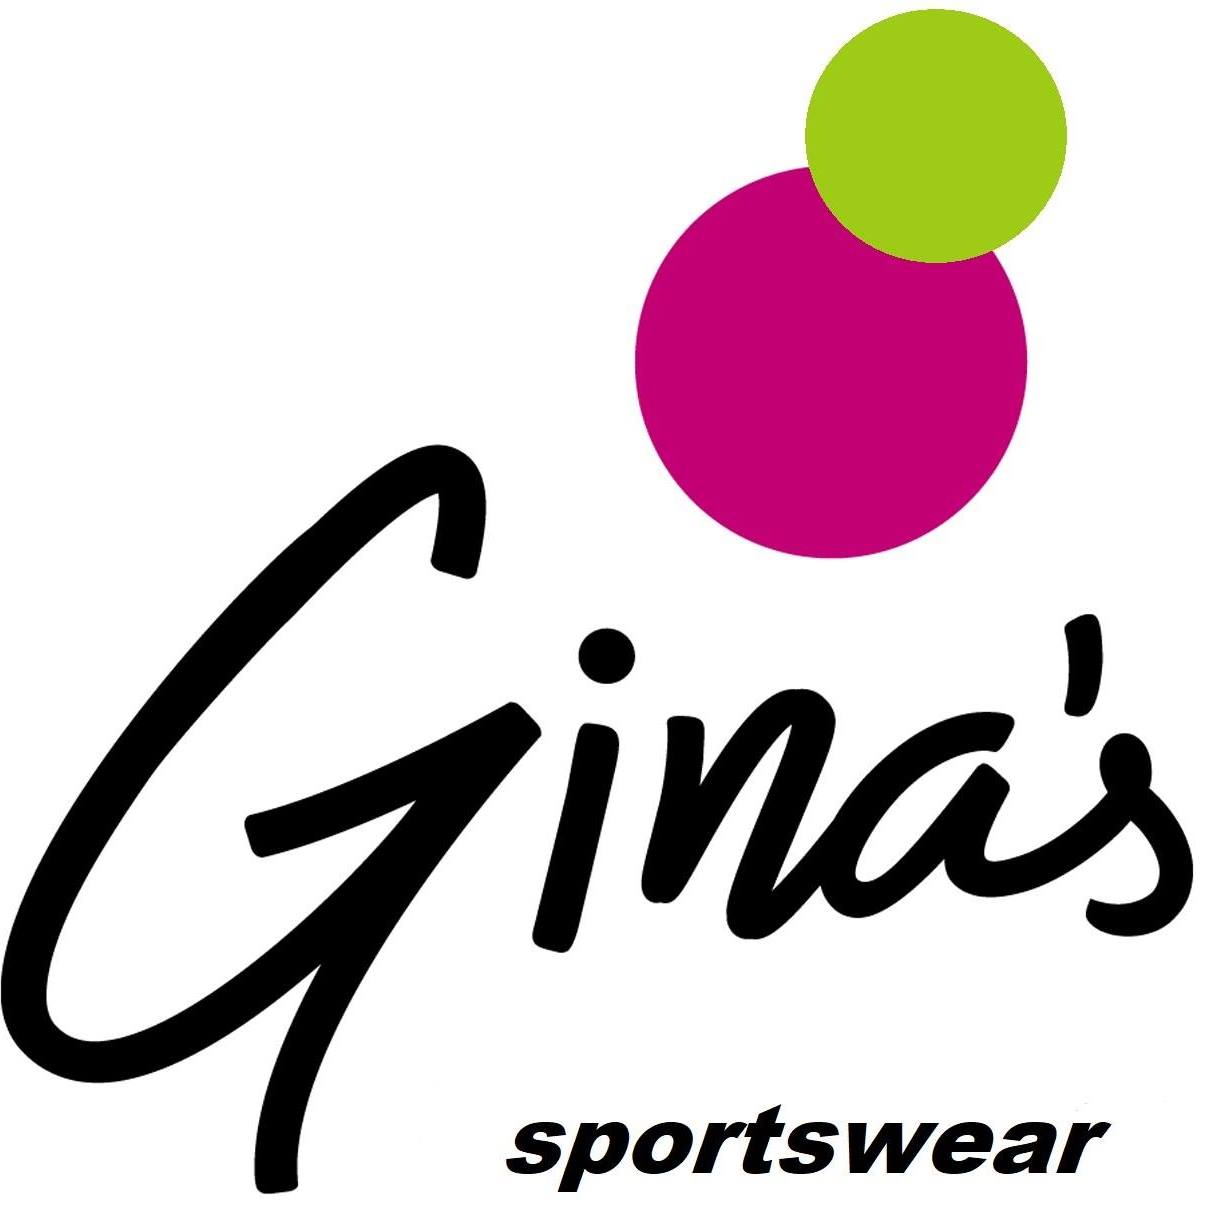 Ginas SportsWear